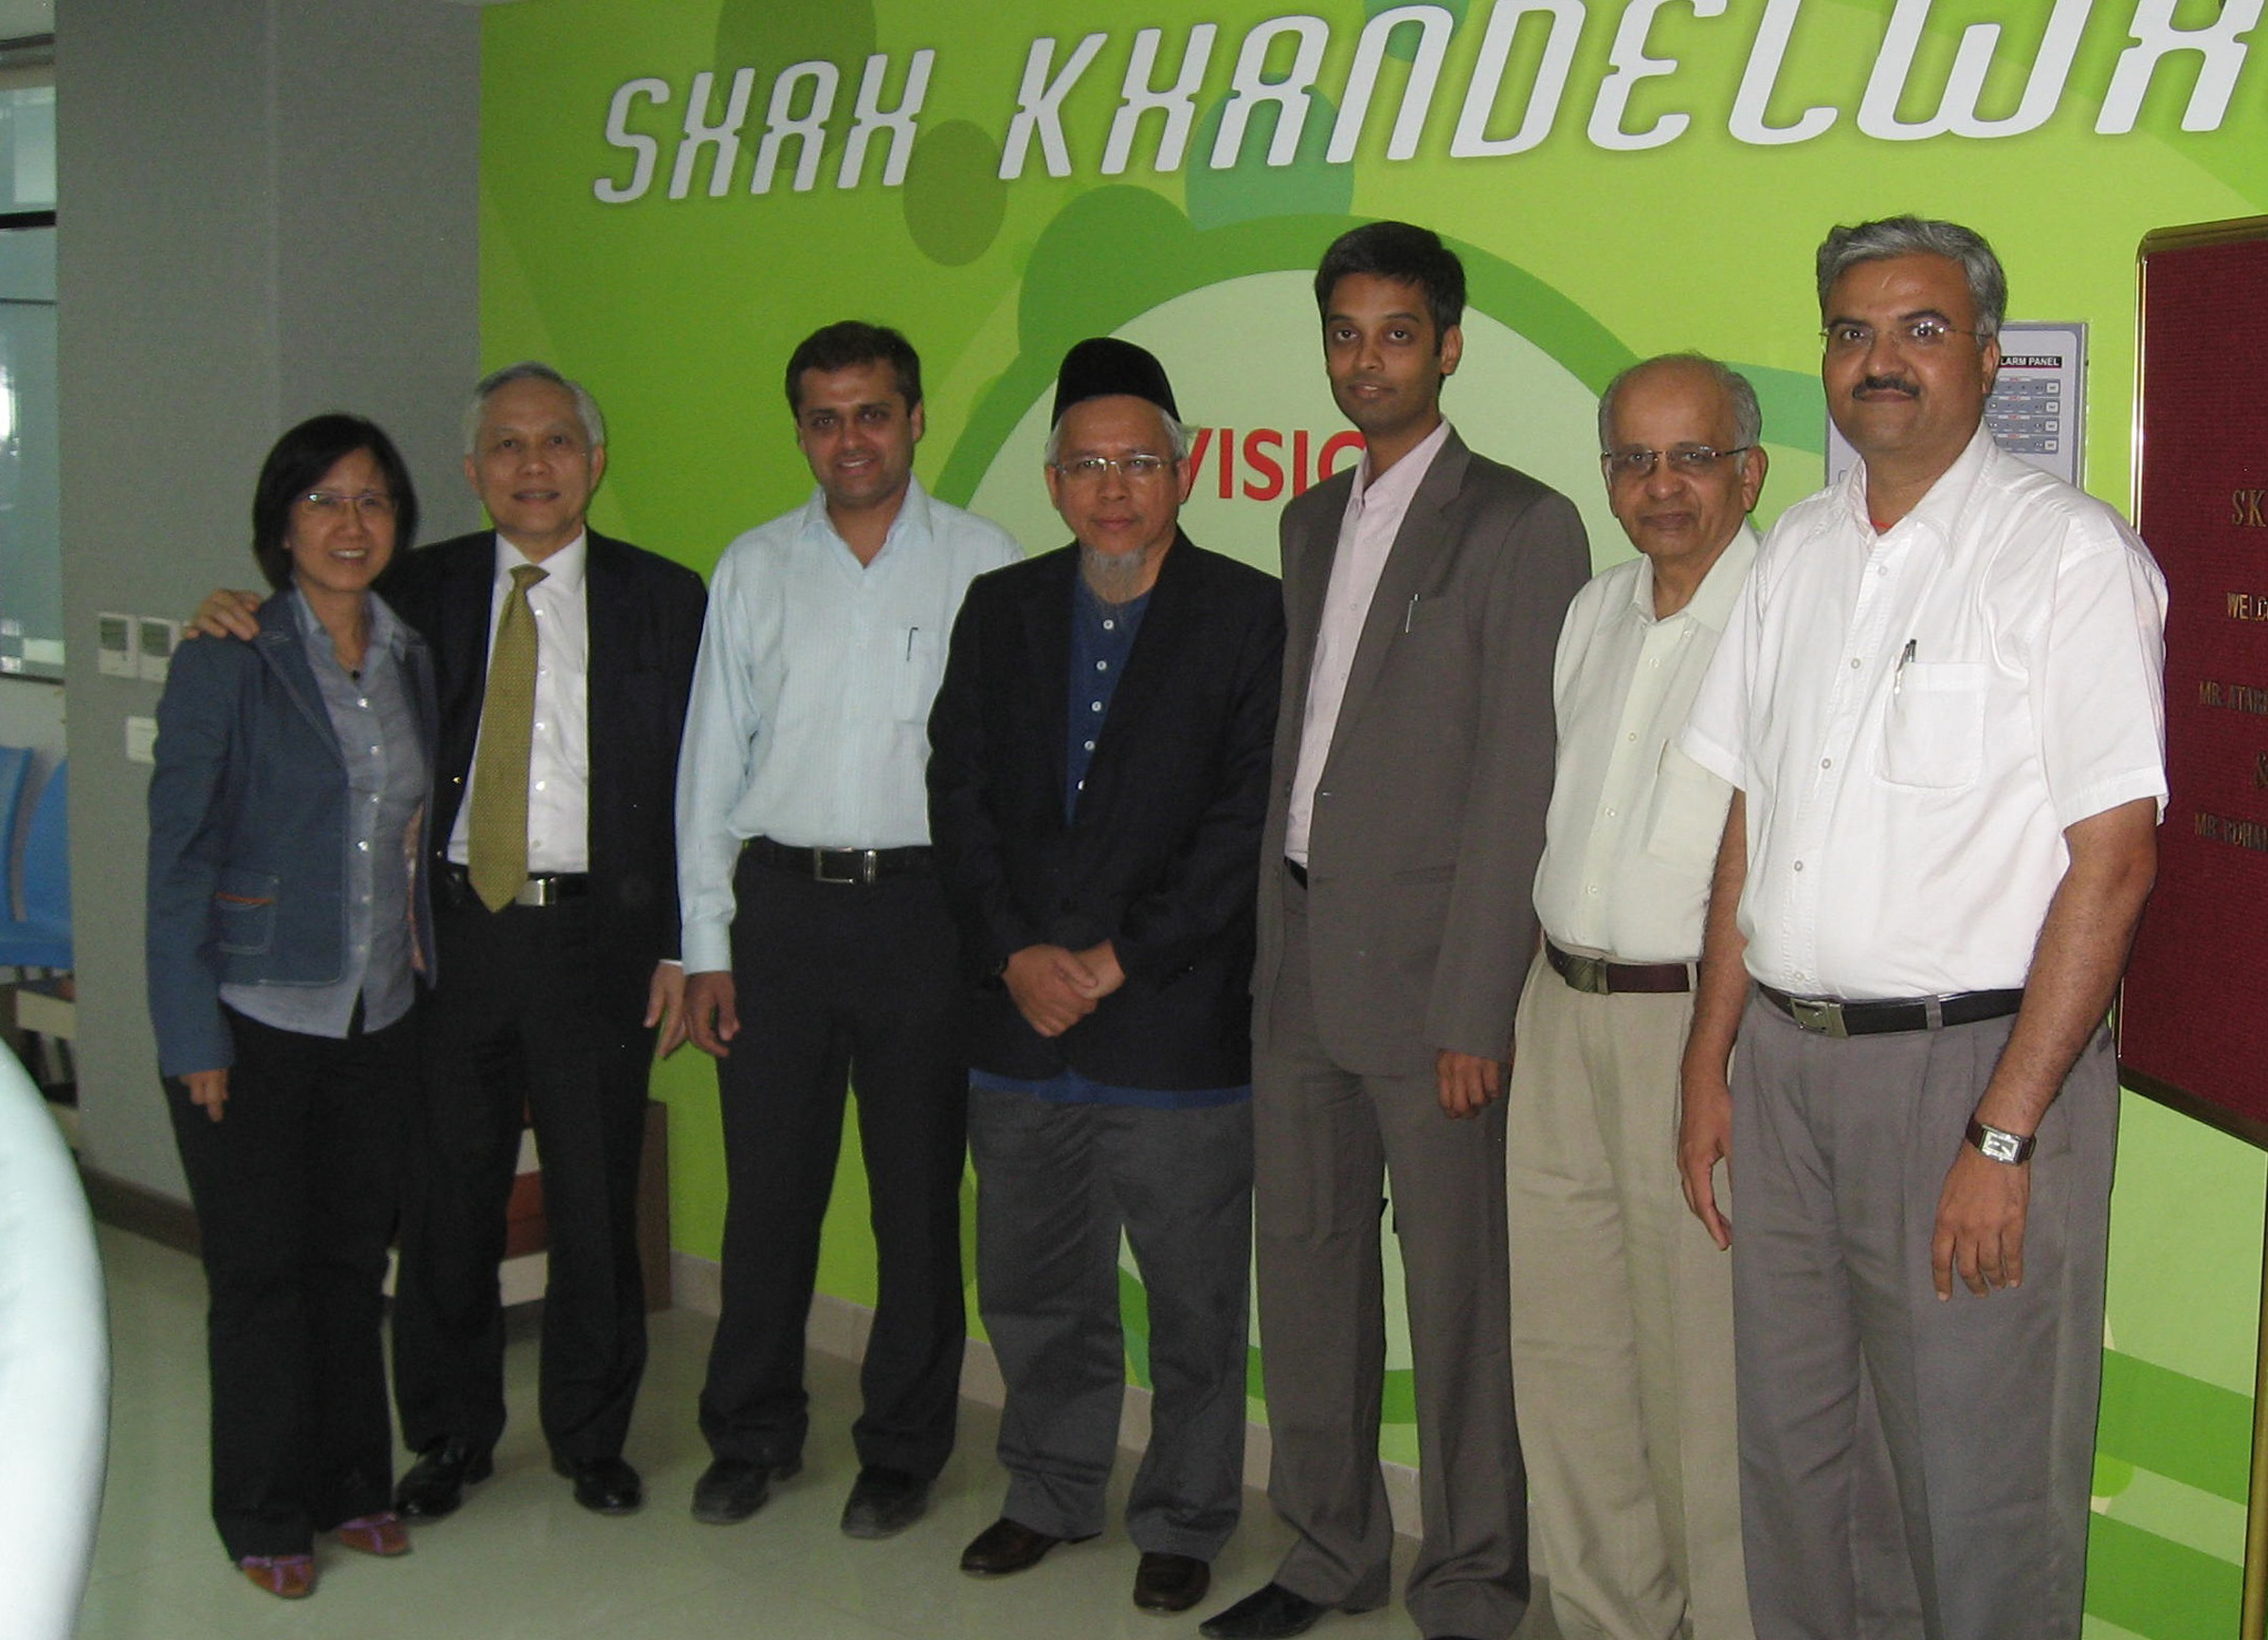 Shah Khandelwal Jain & Associates in Pune